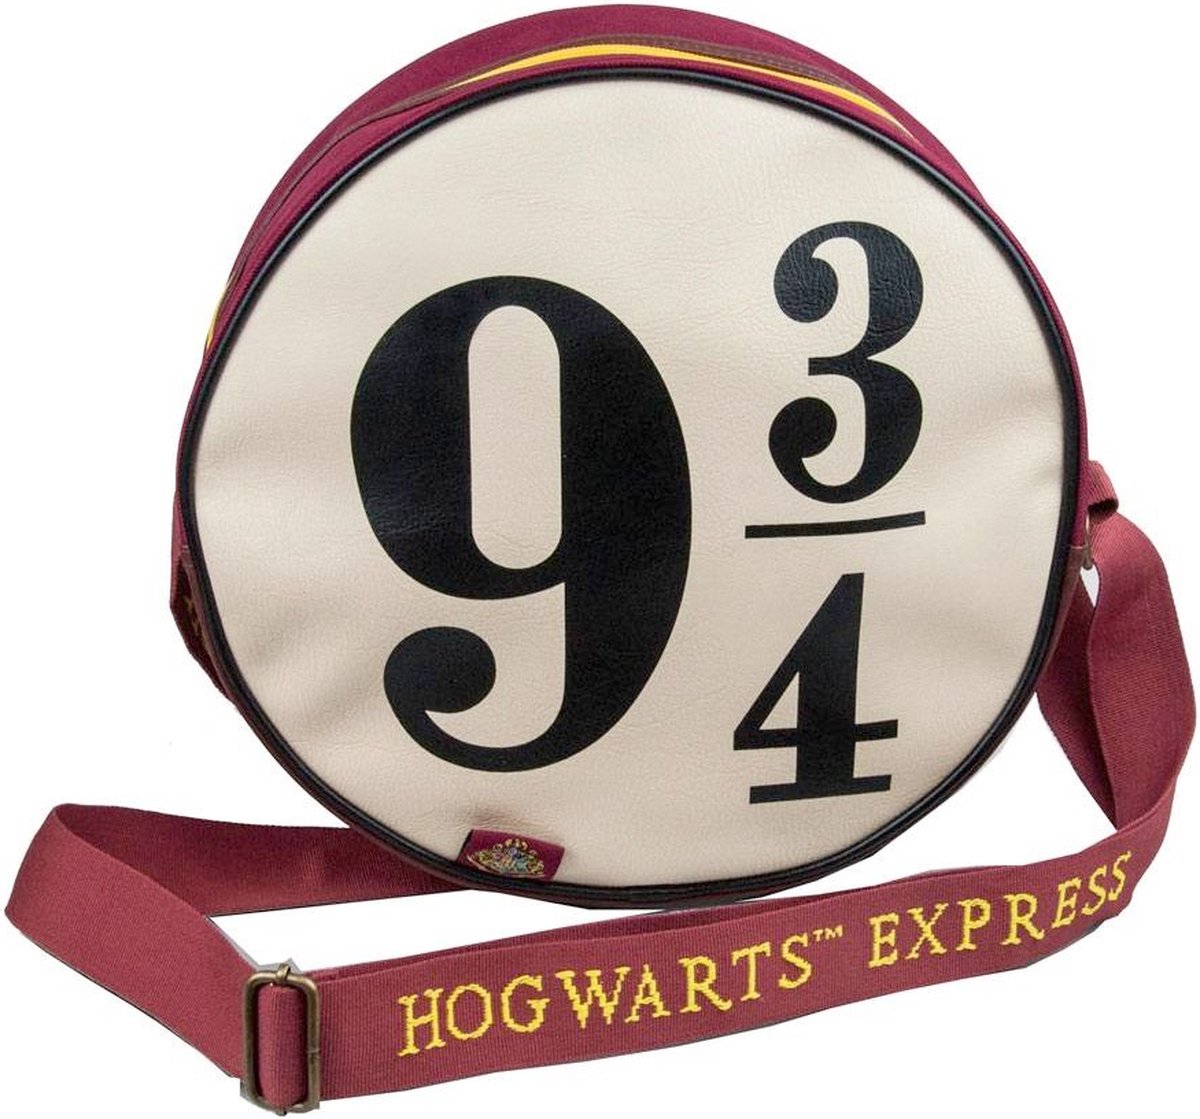 Harry Potter Schoudertas Hogwarts Express 9 3/4 Multicolours